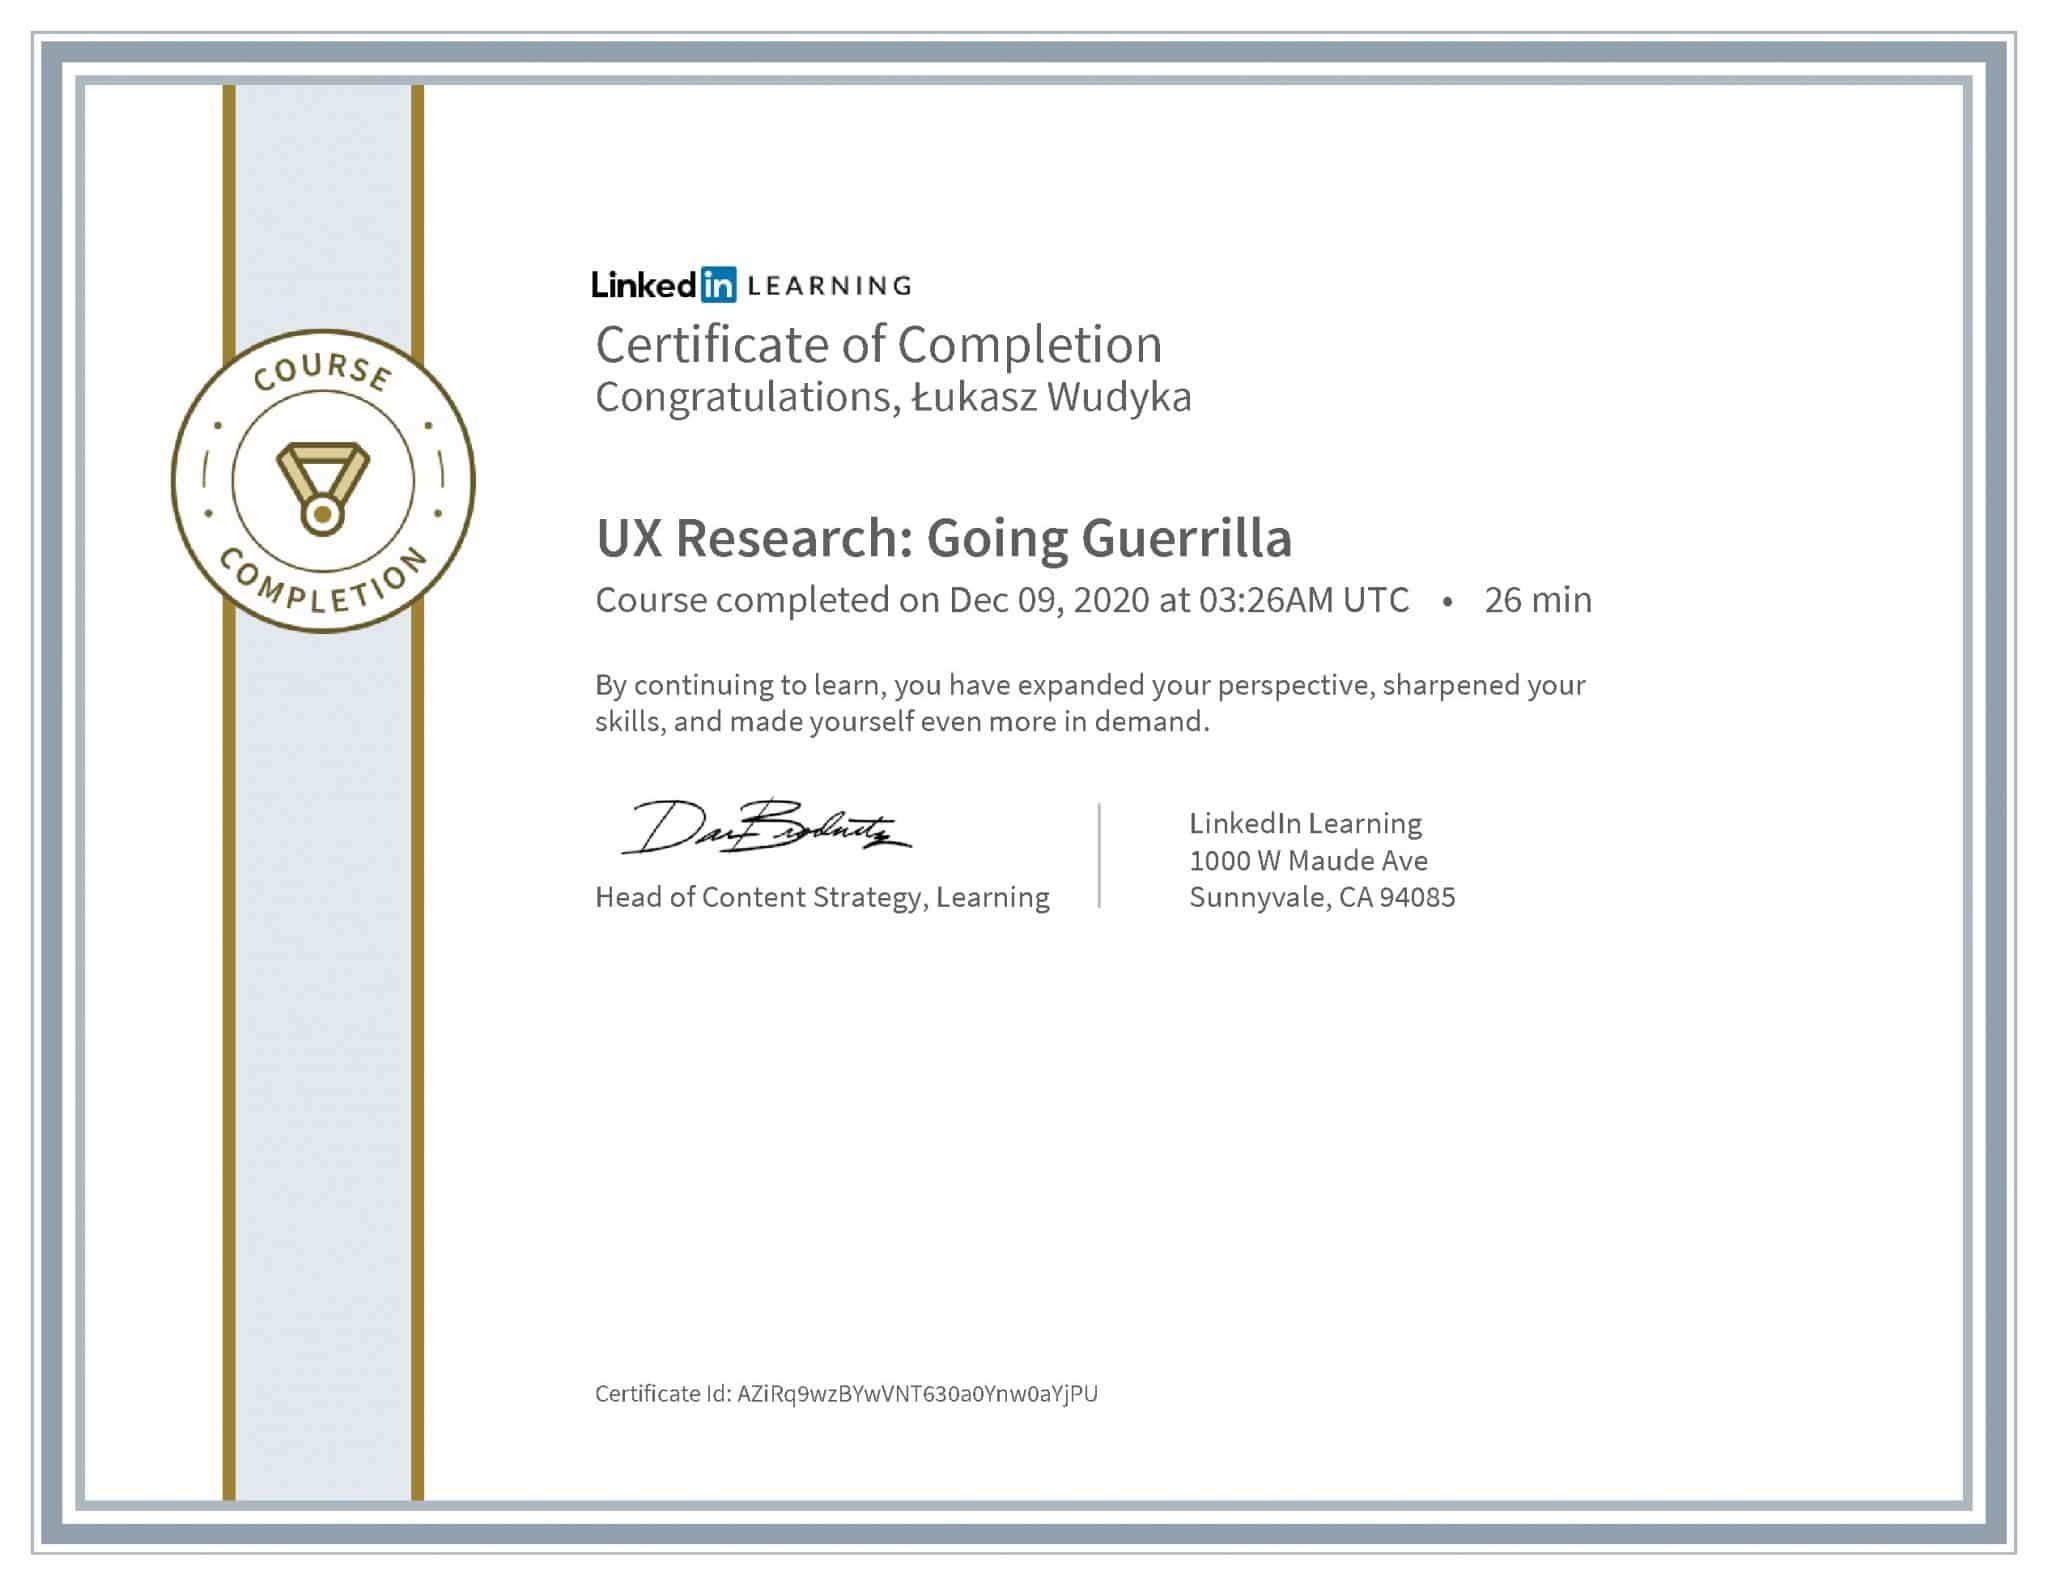 Łukasz Wudyka certyfikat LinkedIn UX Research: Going Guerrilla